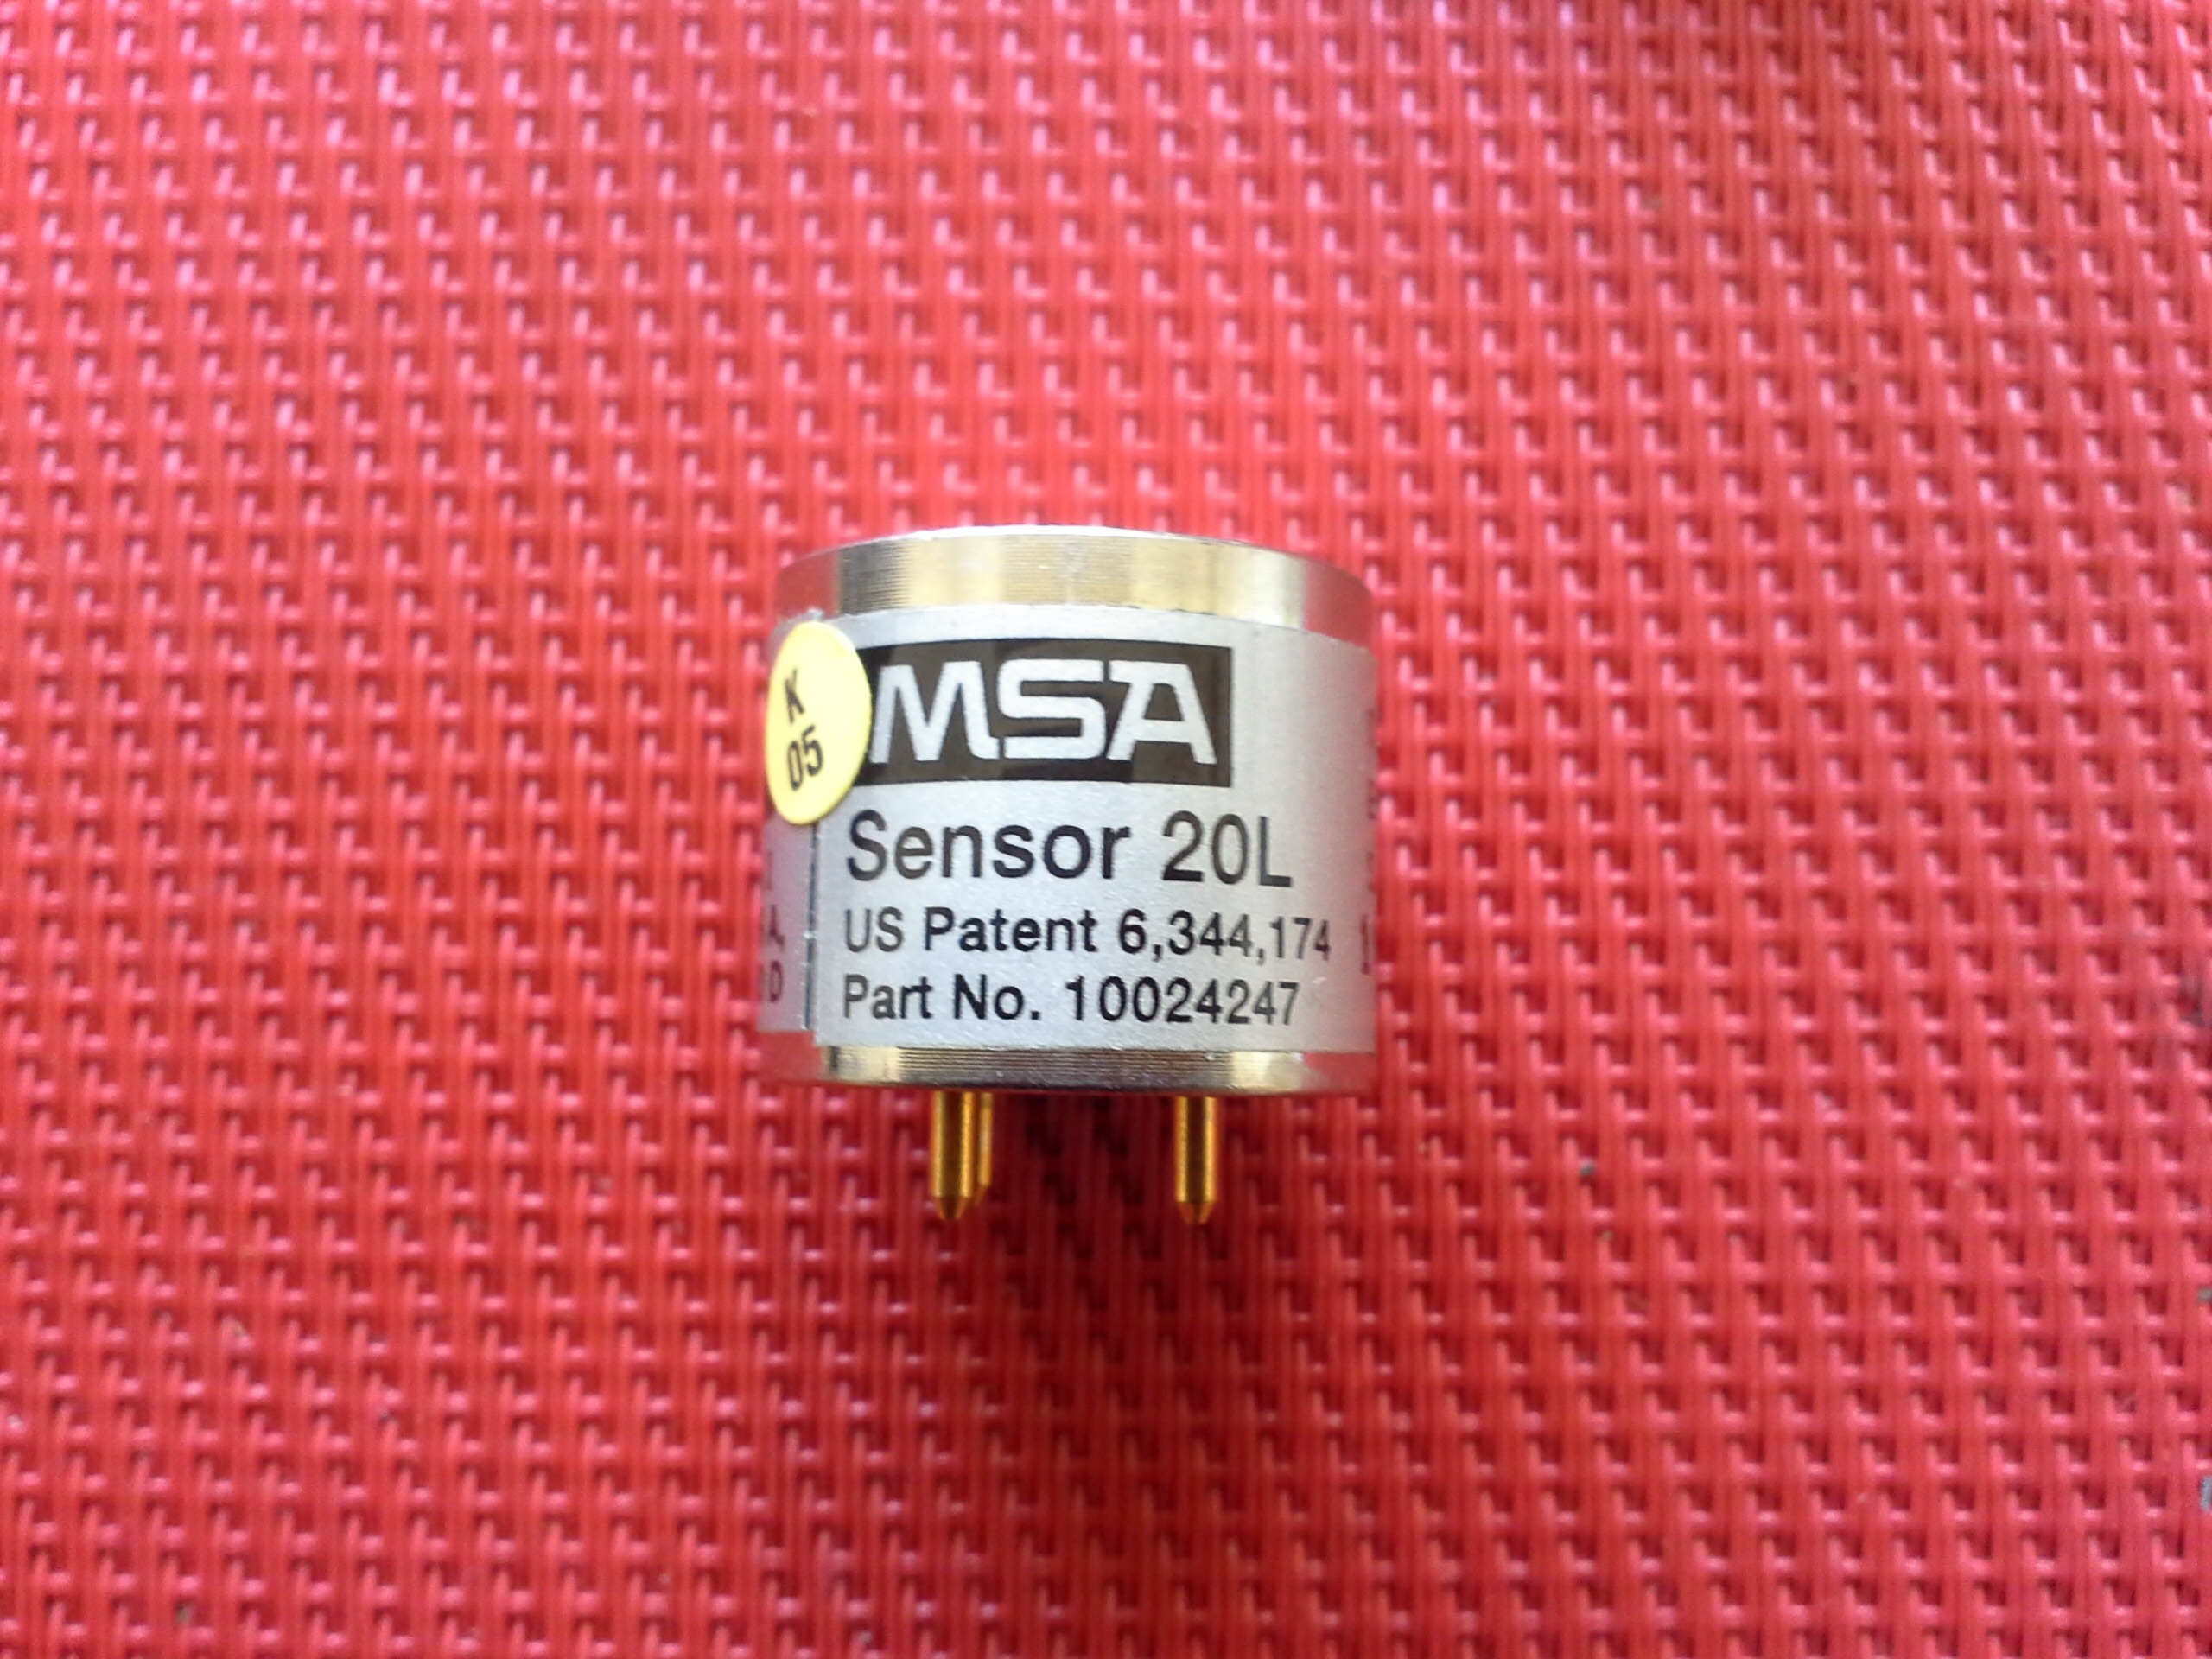 Sensor 20L für Gaswarngeräte der Firma MSA